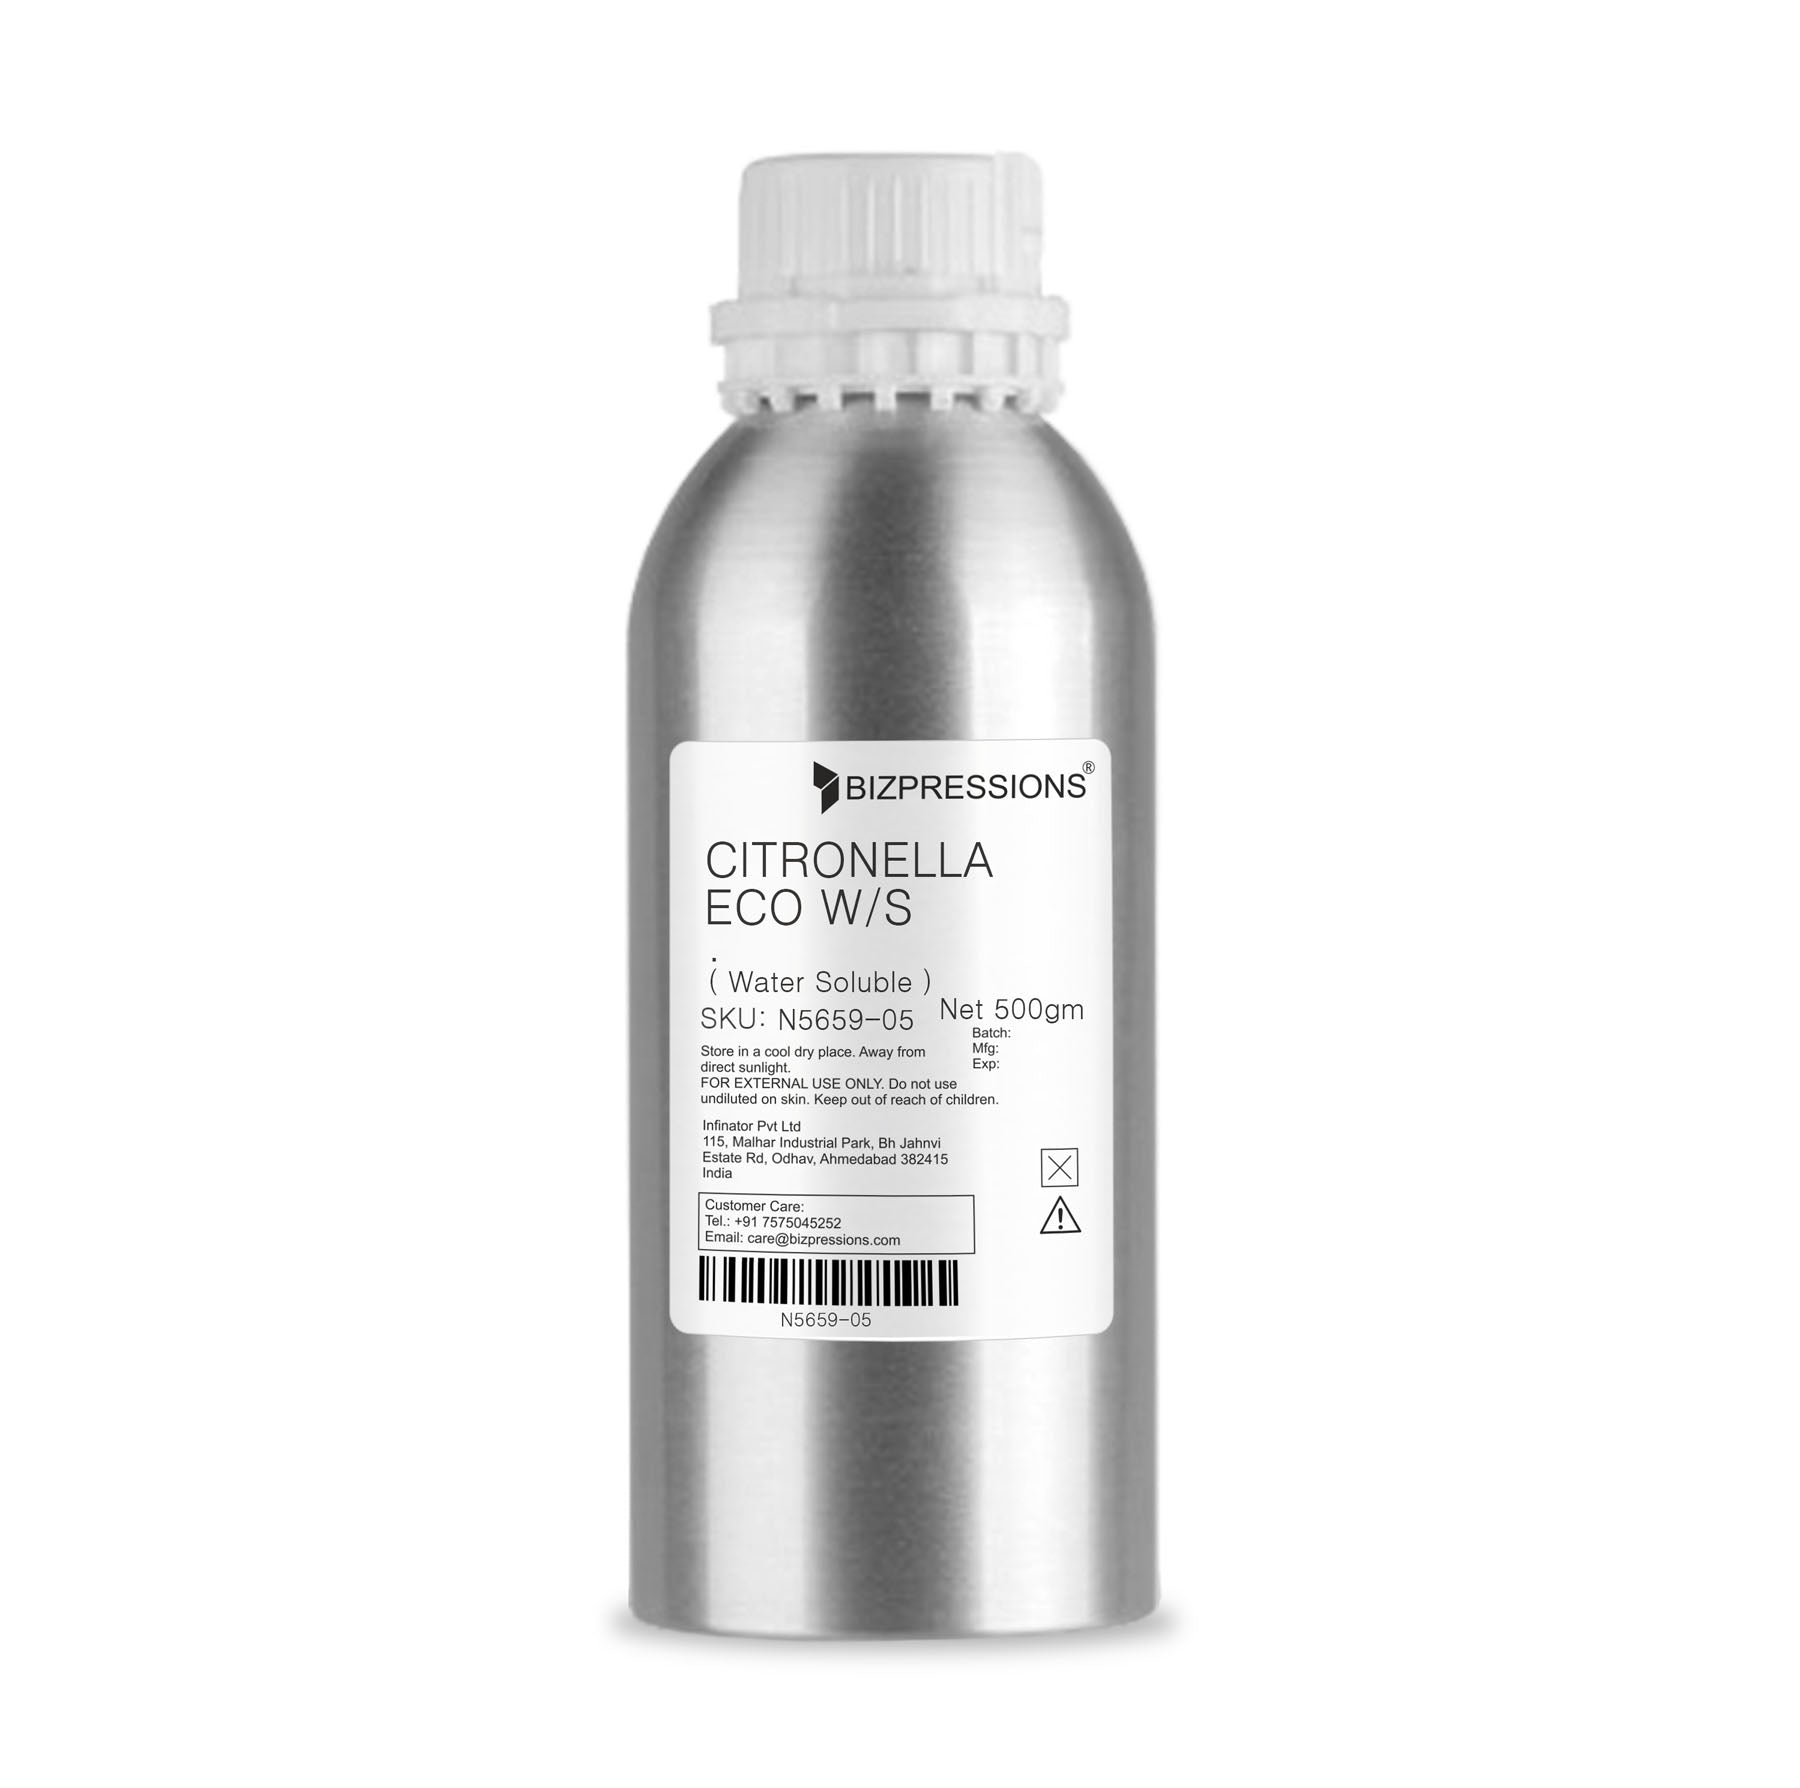 CITRONELLA ECO W/S - Fragrance ( Water Soluble ) - 500 gm